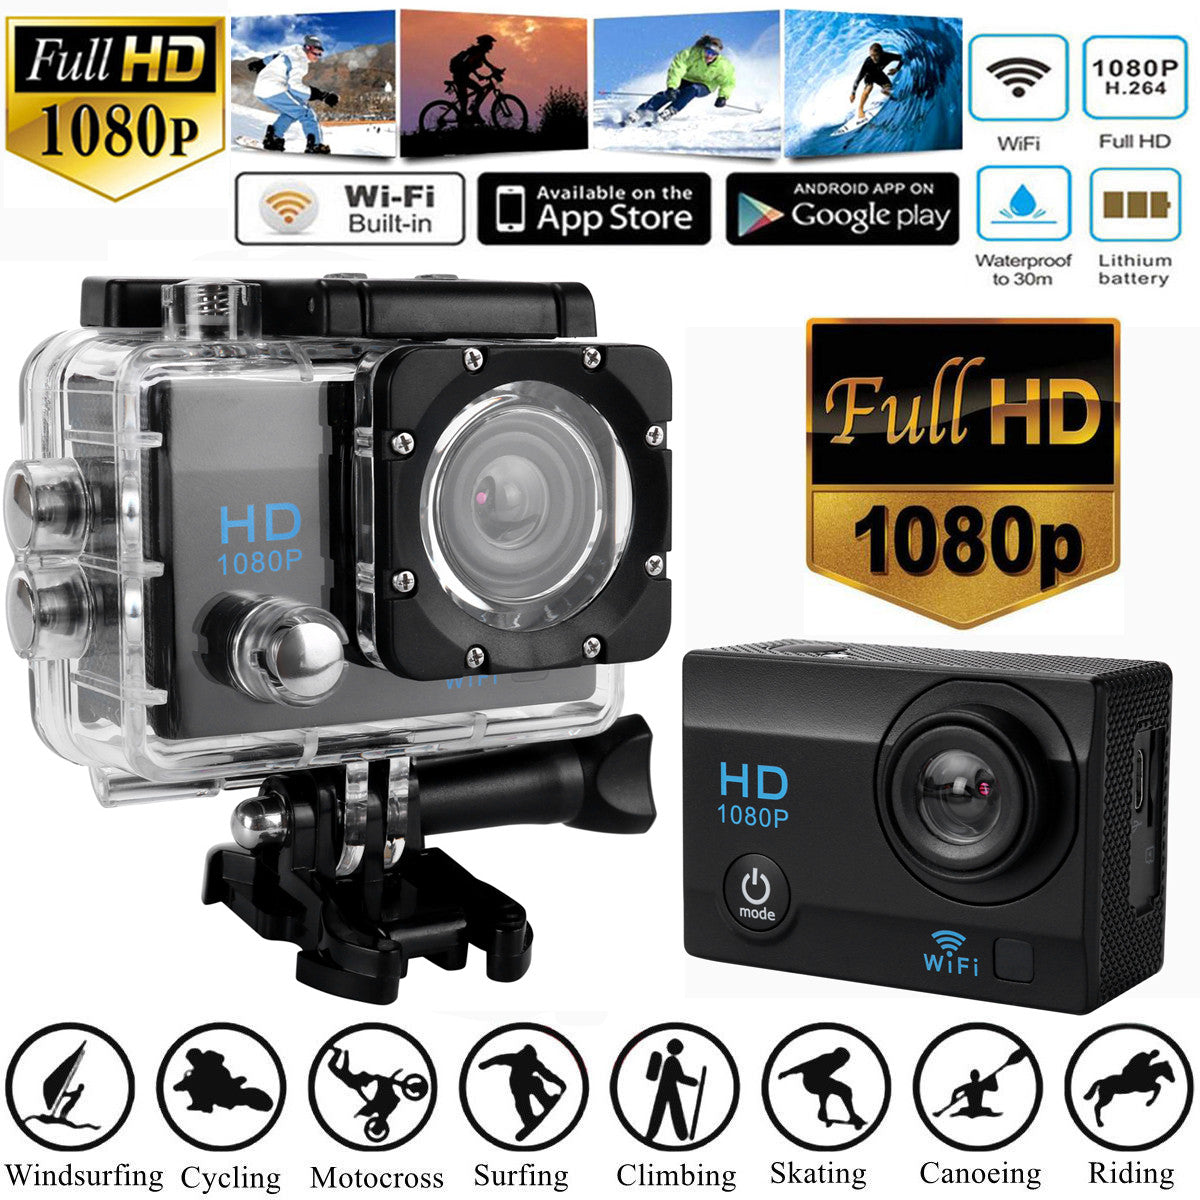 Full HD Waterproof Sports Action Camera – eBikes